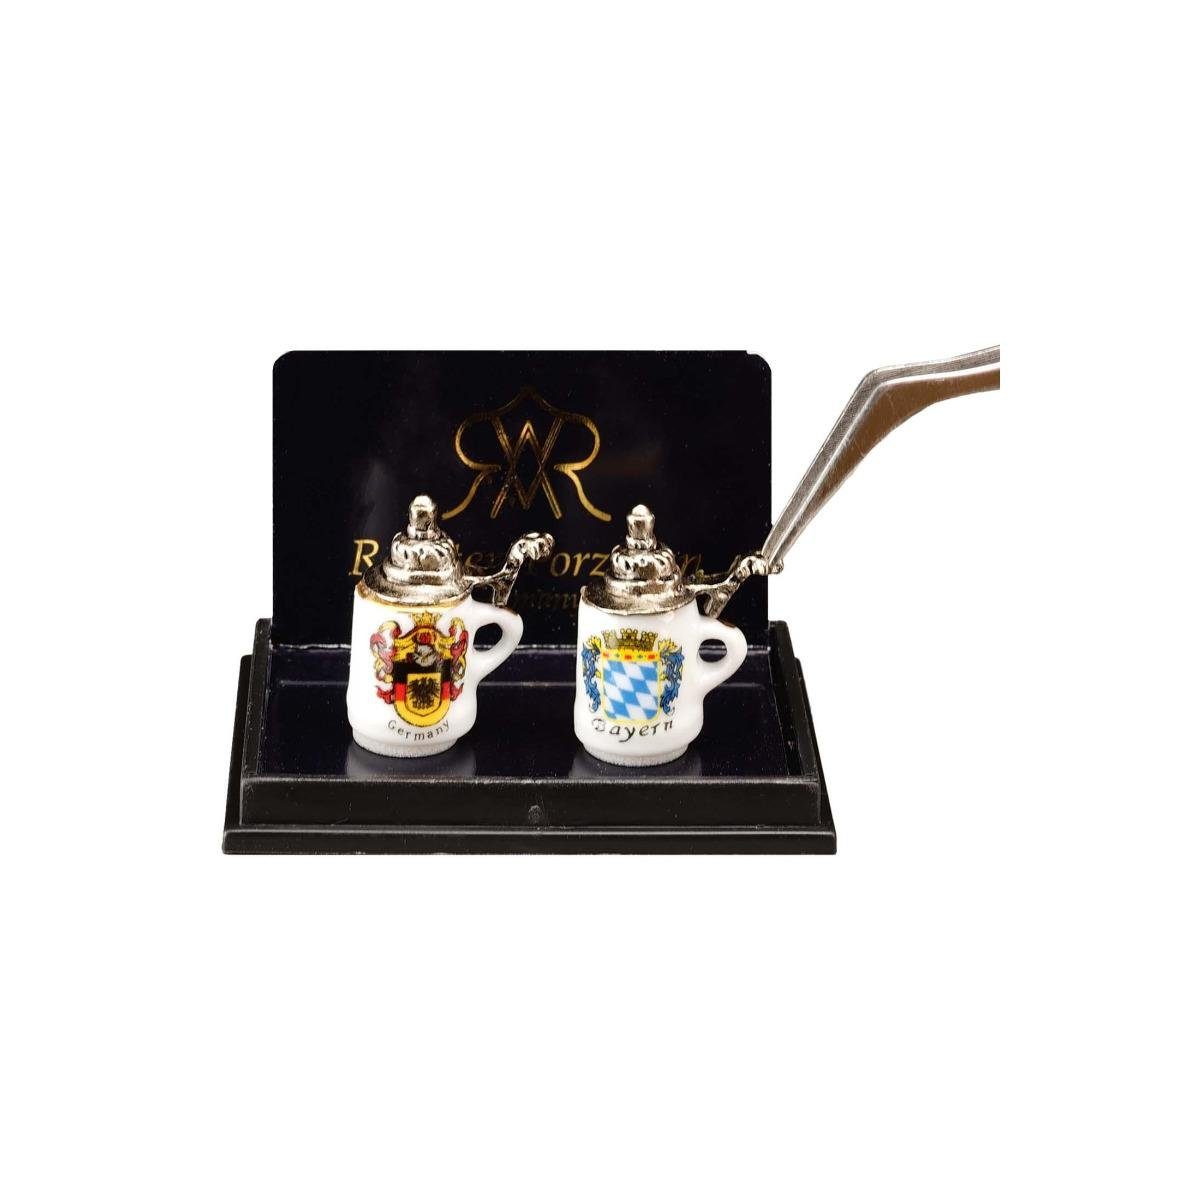 Zinndeckel, Porzellan Miniatur mit Stück, Dekofigur 001.803/5 - Reutter Bierkrüge 2